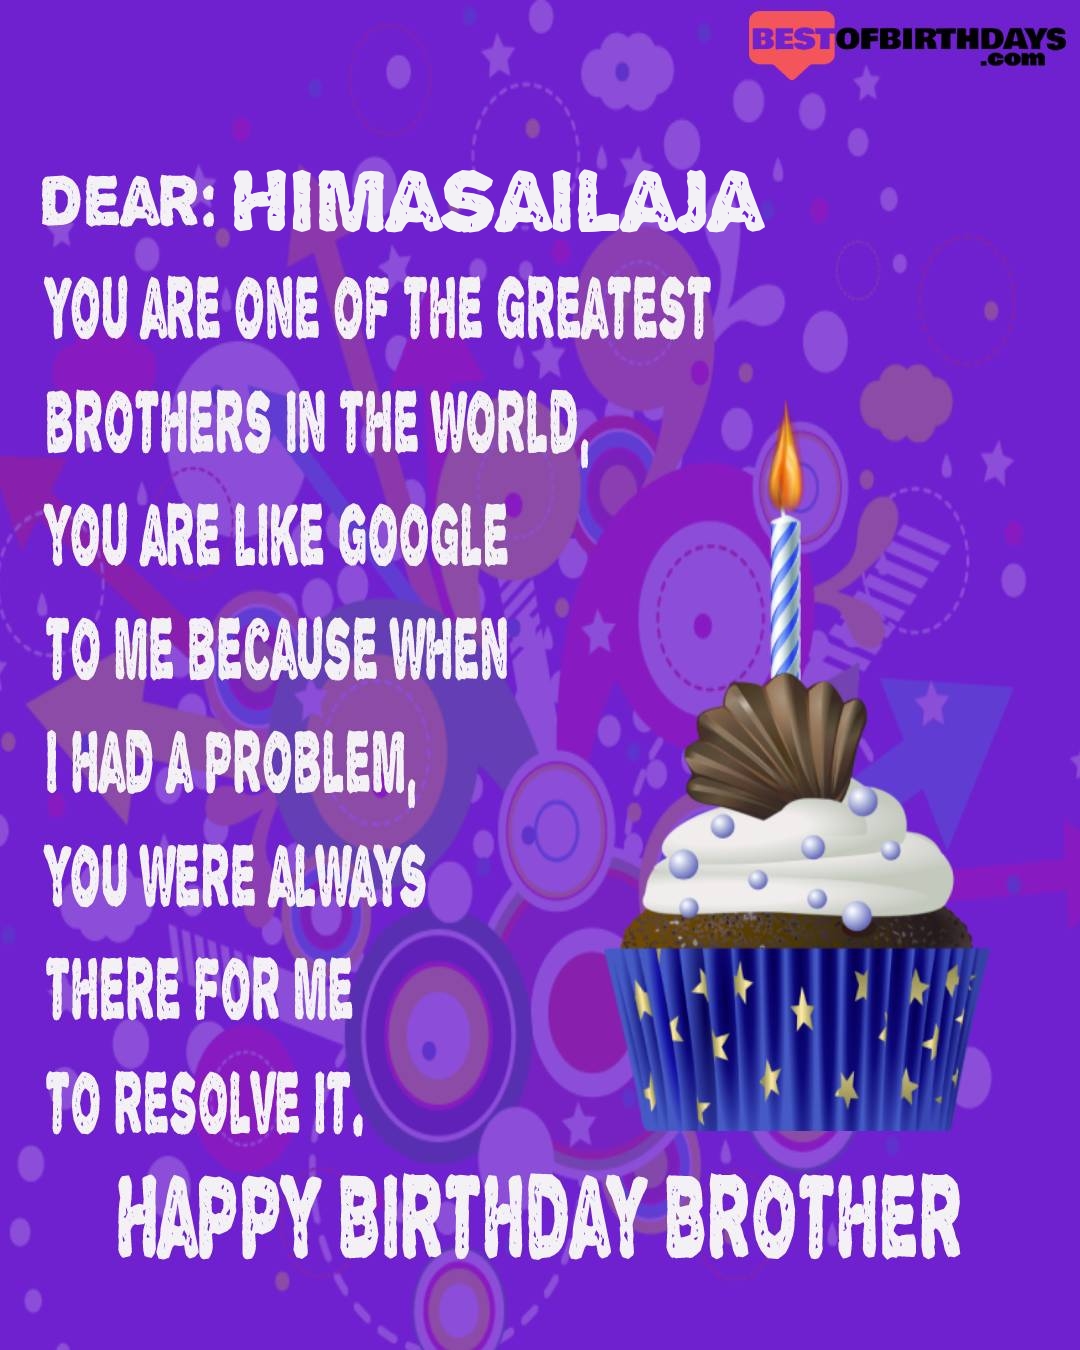 Happy birthday himasailaja bhai brother bro